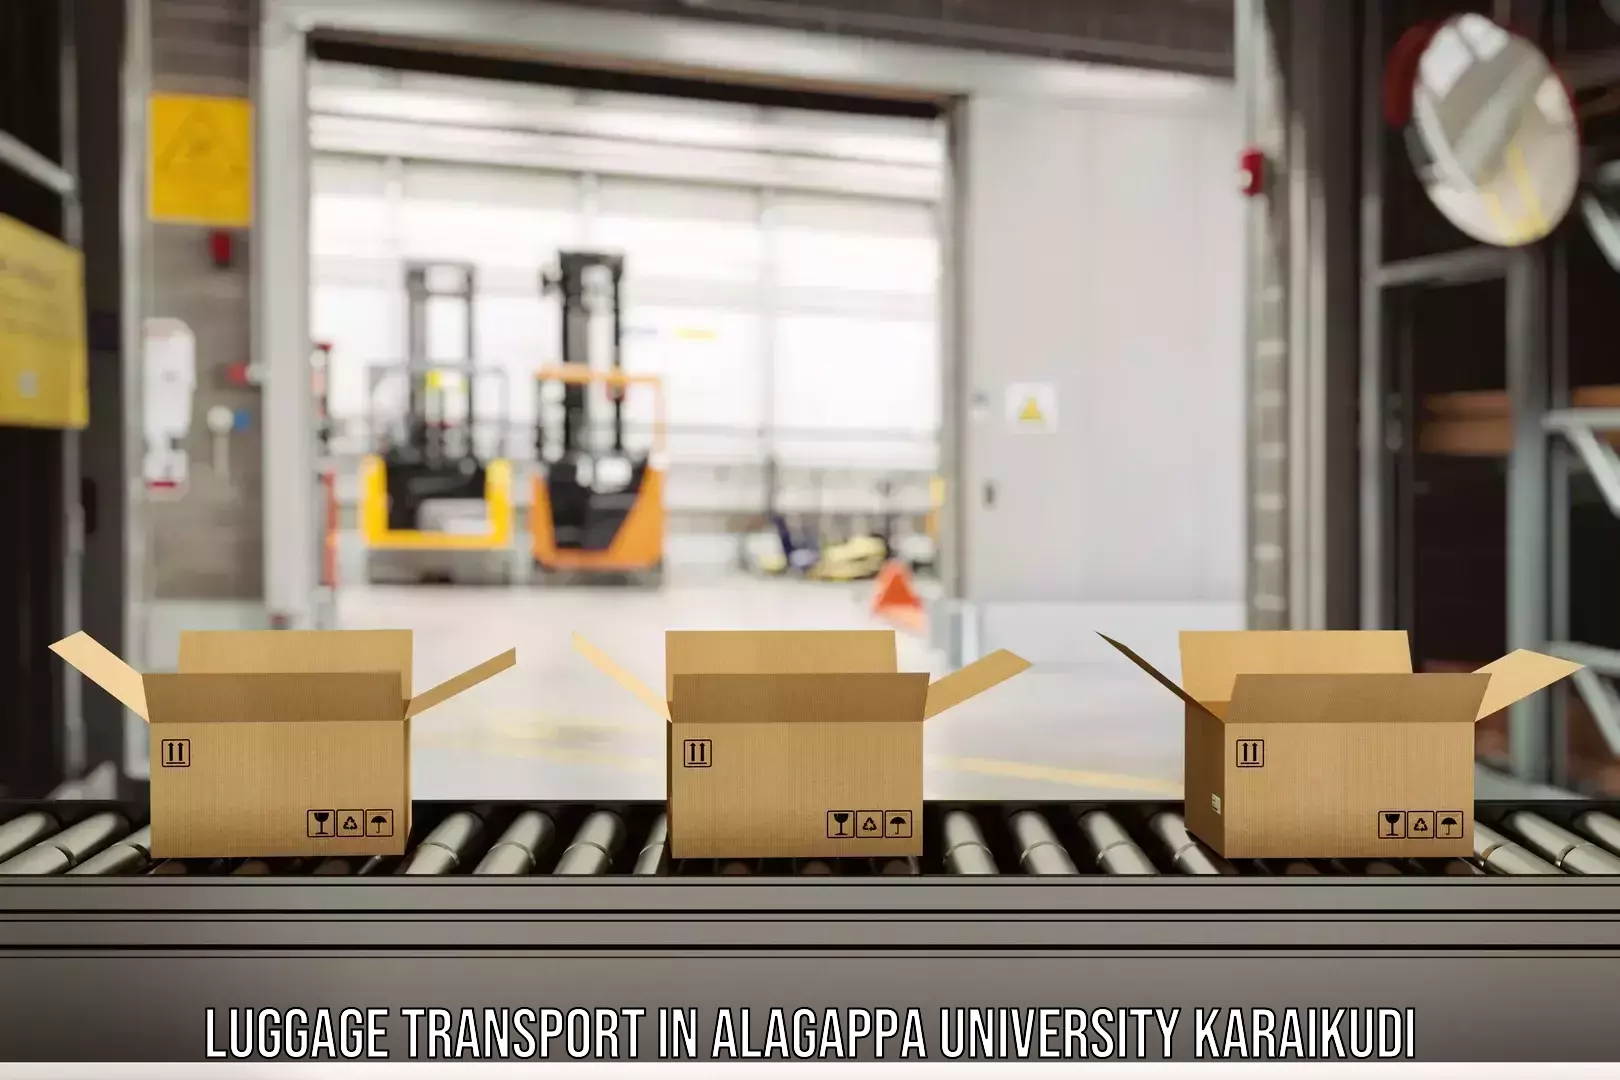 Baggage transport management in Alagappa University Karaikudi